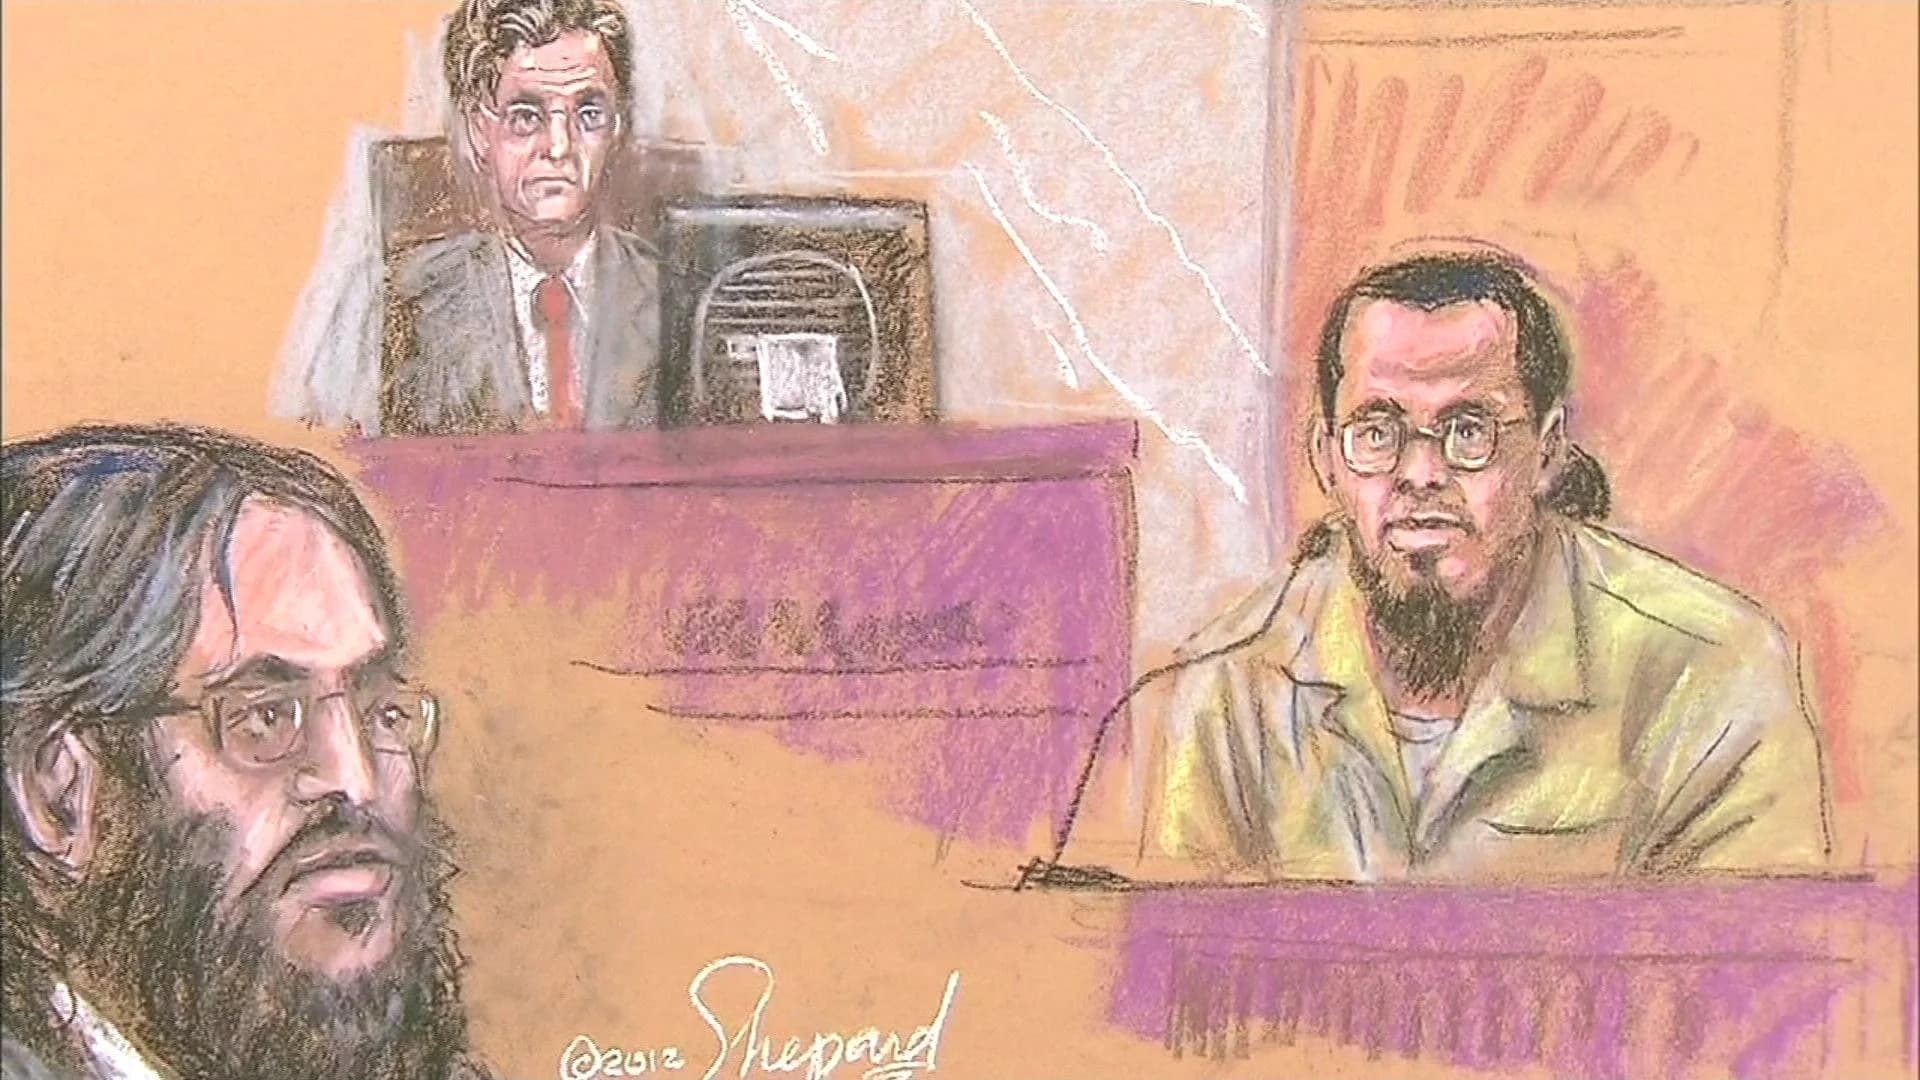 LI man convicted of aiding al-Qaida sentenced